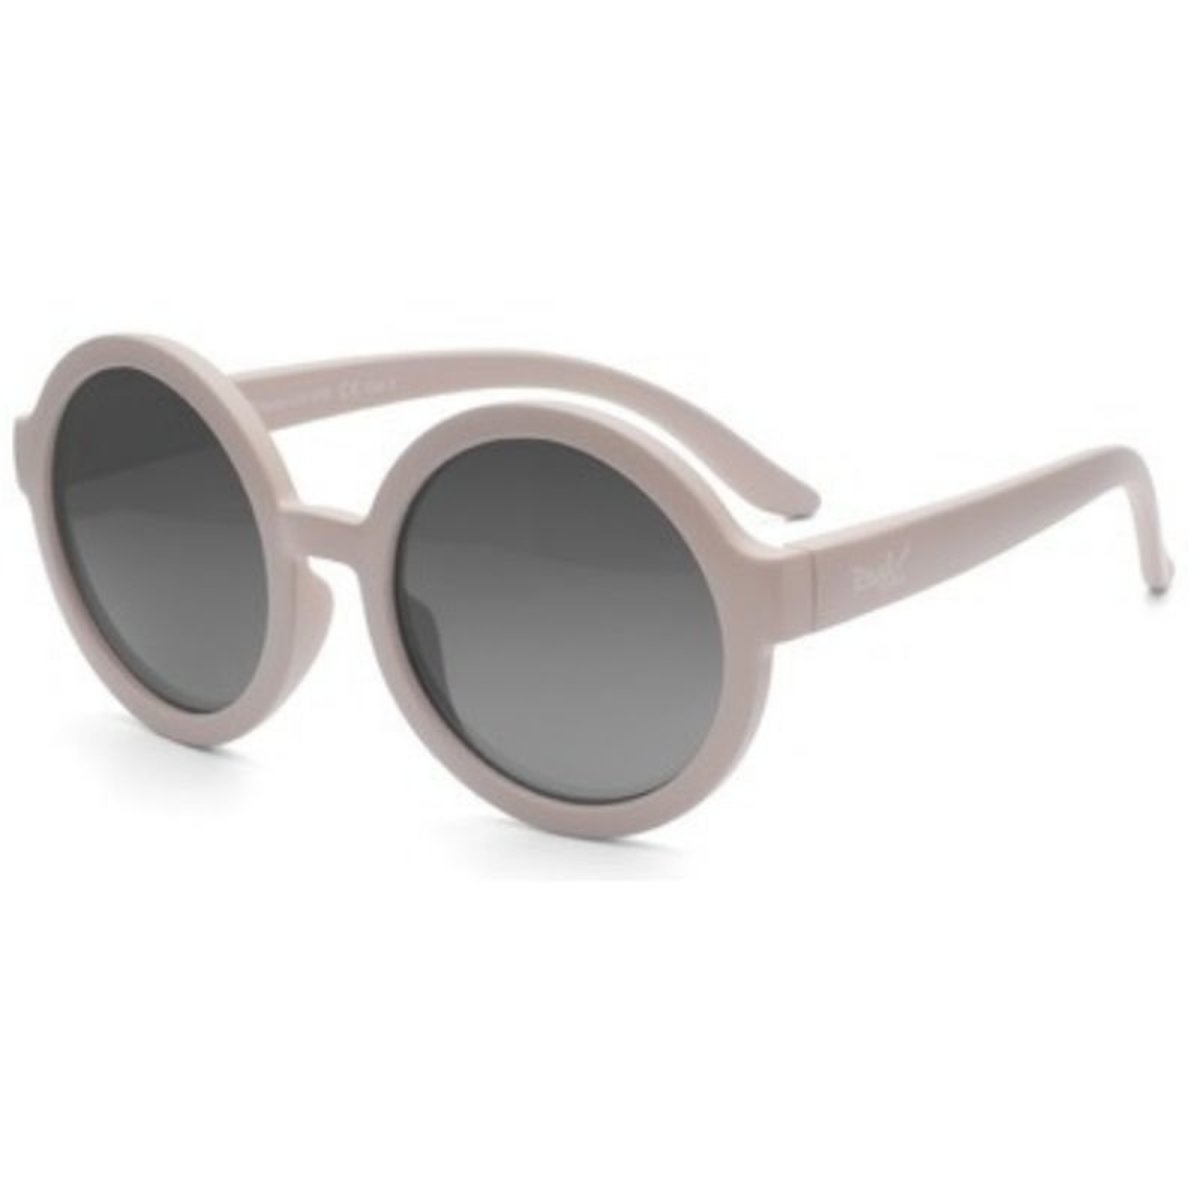 Real Shades - UV sunglasses for kids - Vibe - Matte Warm Grey